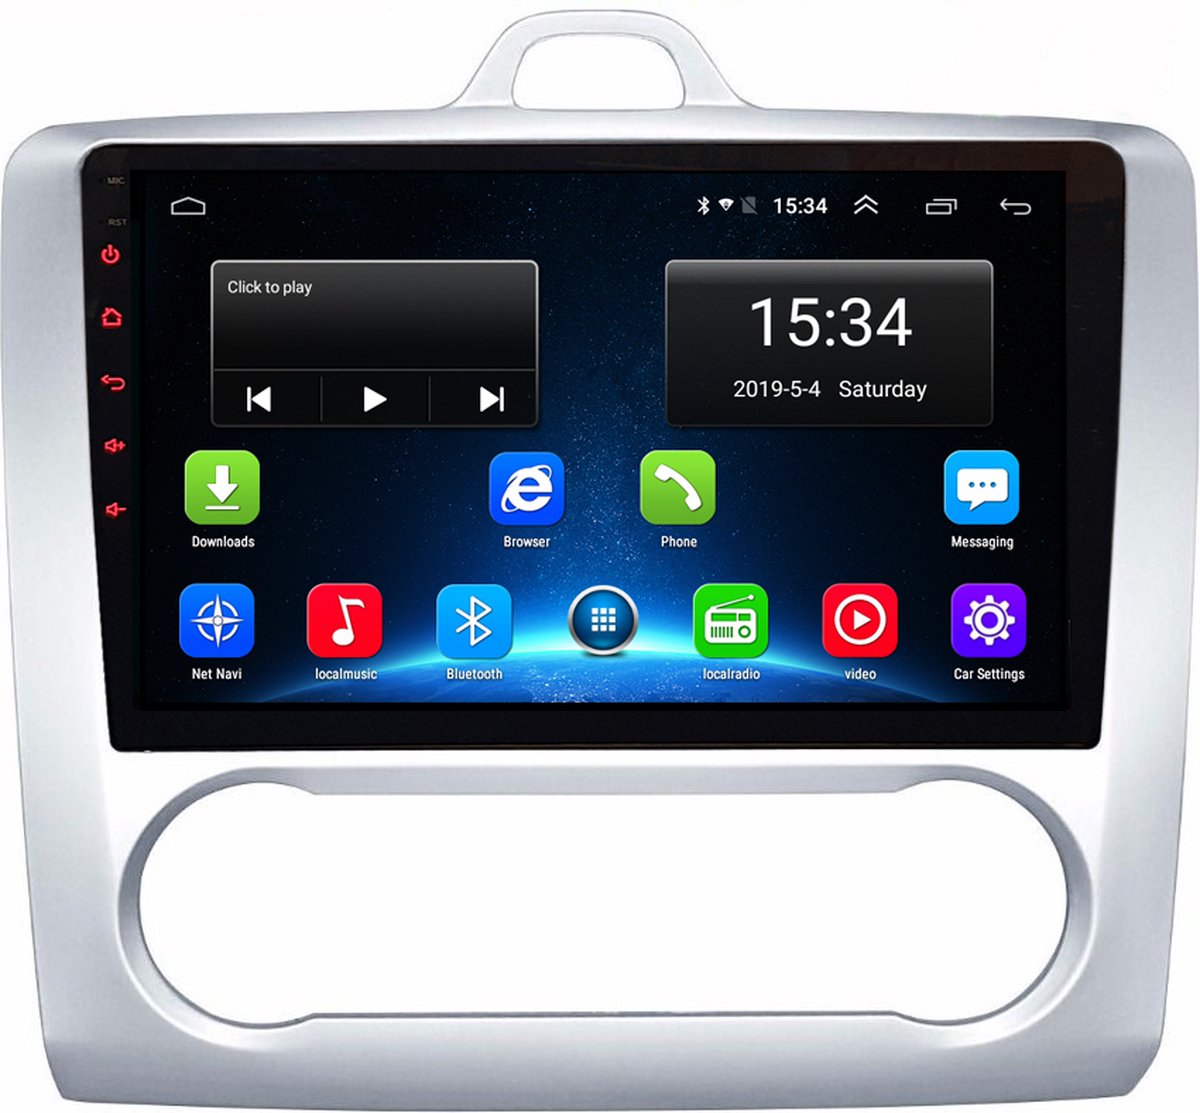 Navigatie radio Ford Focus, Android 8.1 OS, Apple Carplay, 9 inch scherm, GPS, Wifi, Mirro - Merkloos